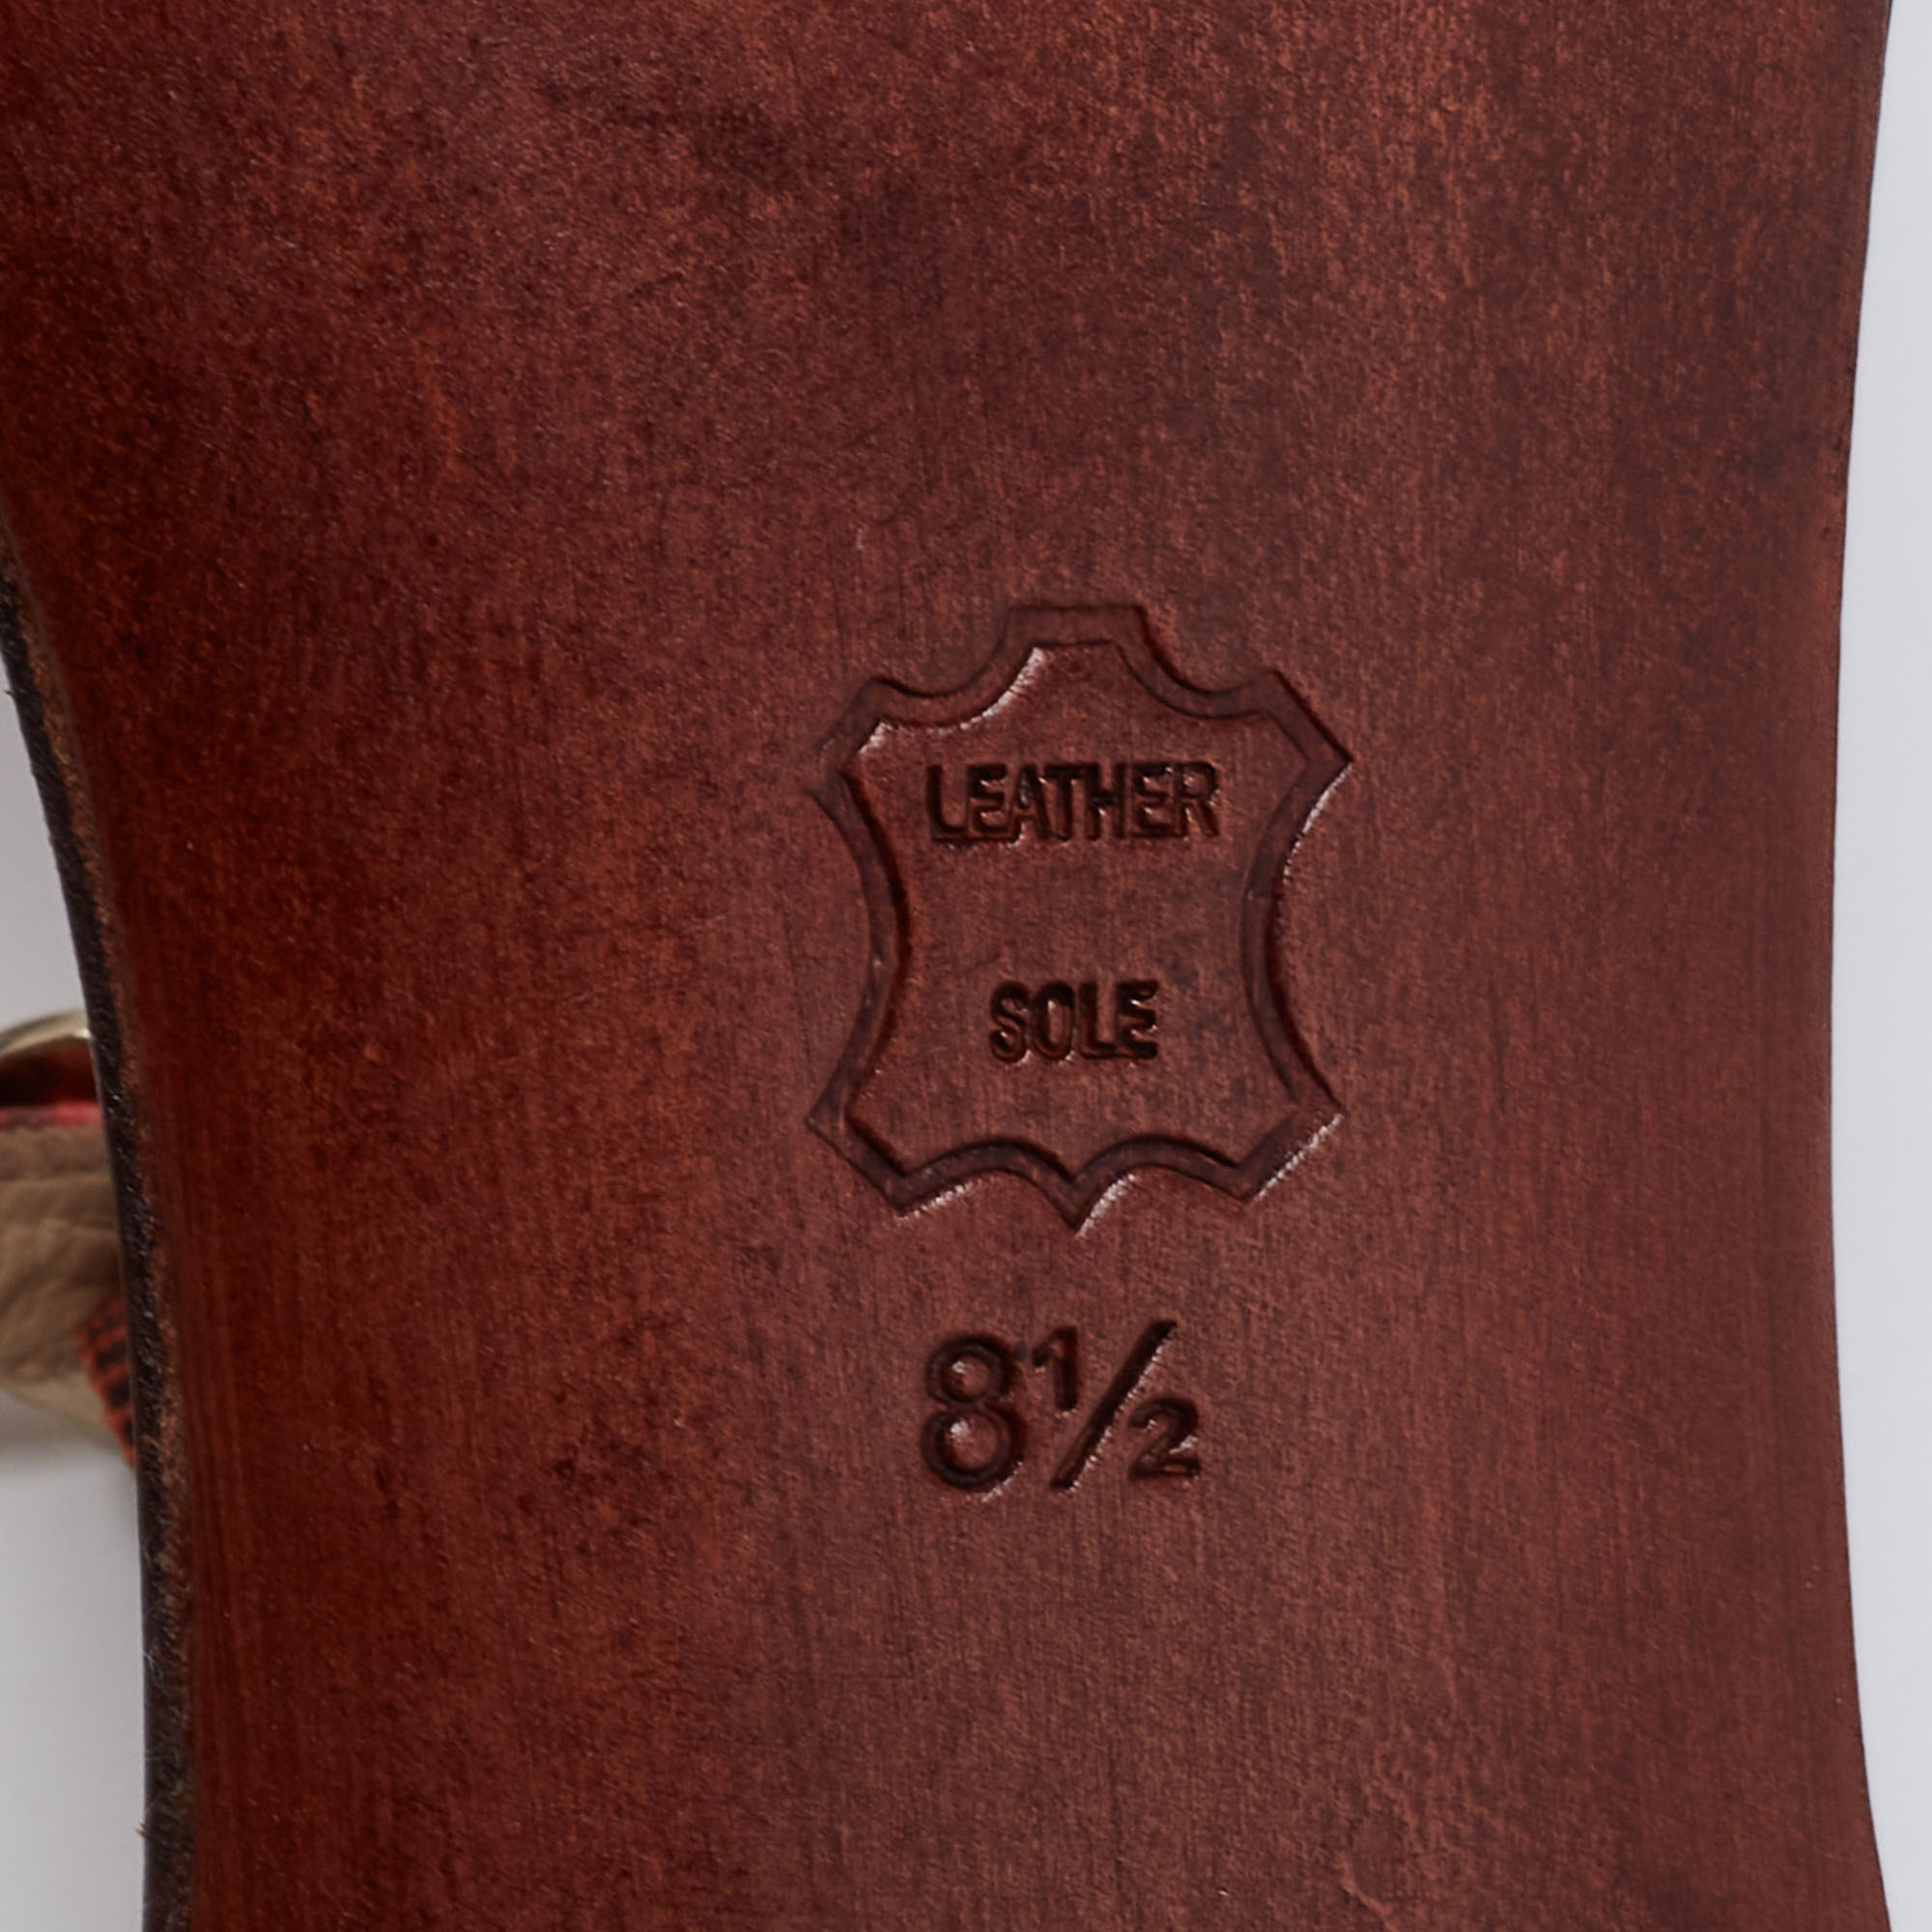 Alexandre Birman Red Python Leather T Strap Flat Sandals Size 38.5